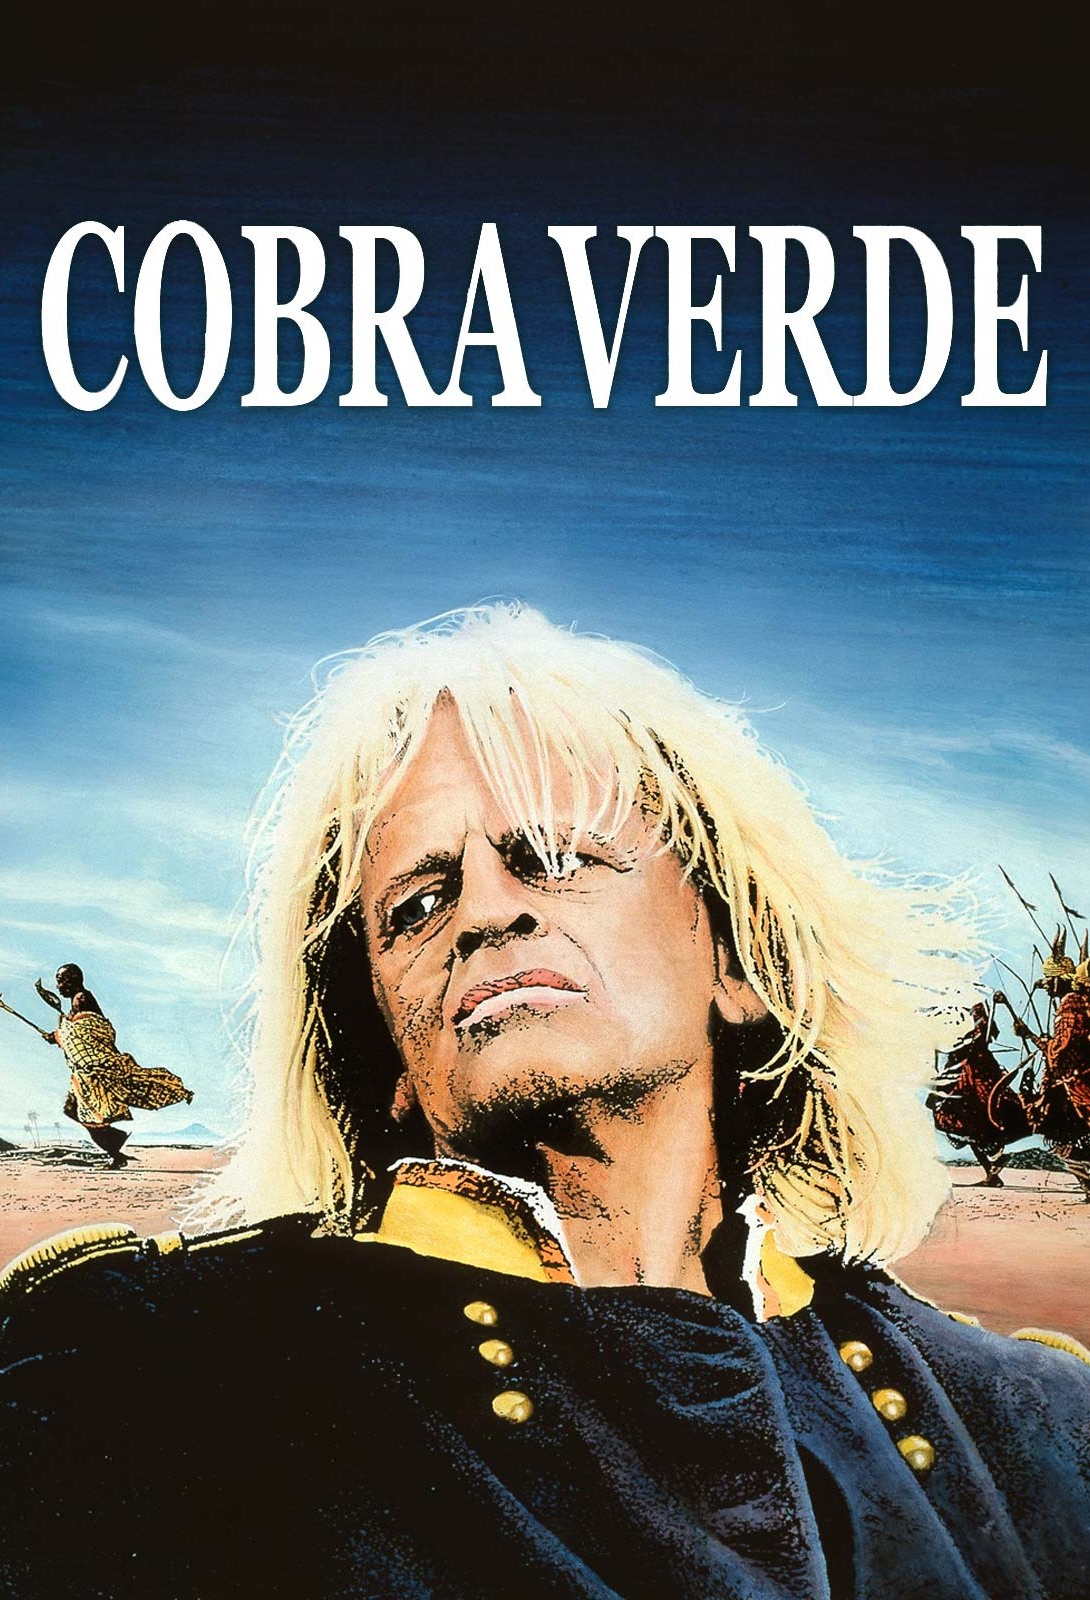 Cobra Verde [HD] (1987)